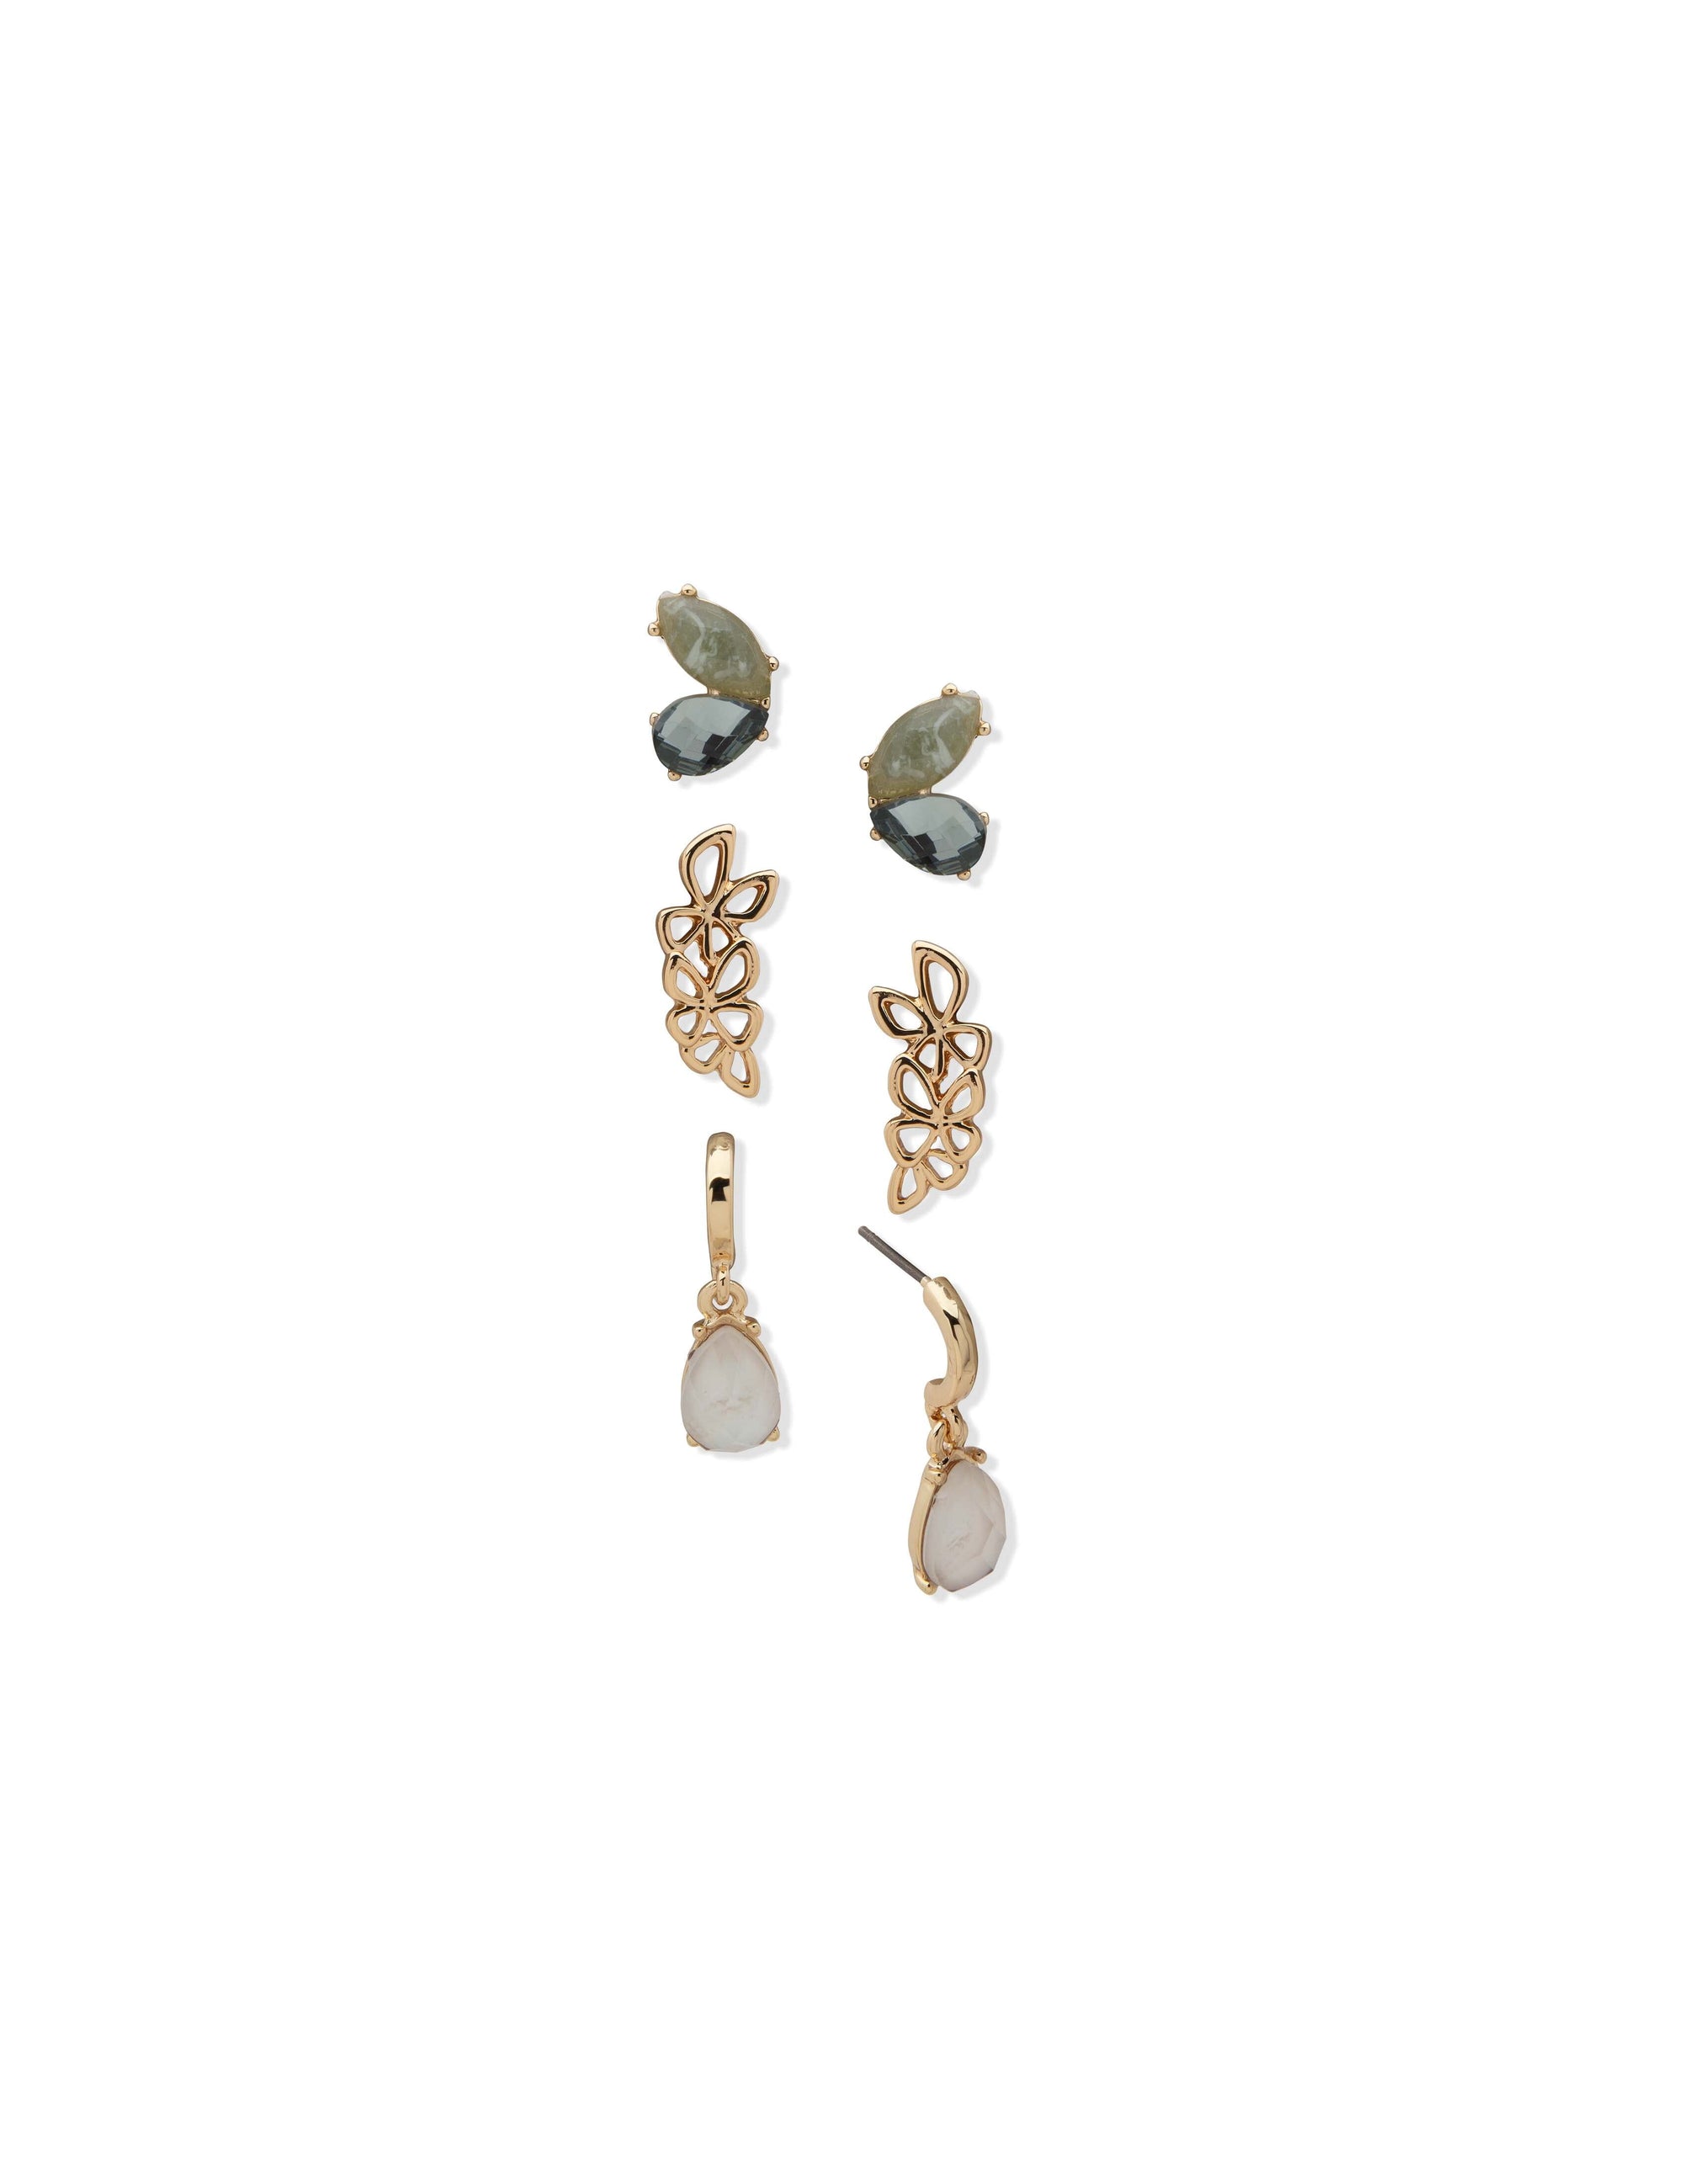 latest gold earrings design 2021 sone ki bali ka design gold studs | latest  gold earrings design 2021 sone ki bali ka design gold studs #goldearrings  #latestearrings #kankibali | By Orient Fashion YoutubeFacebook